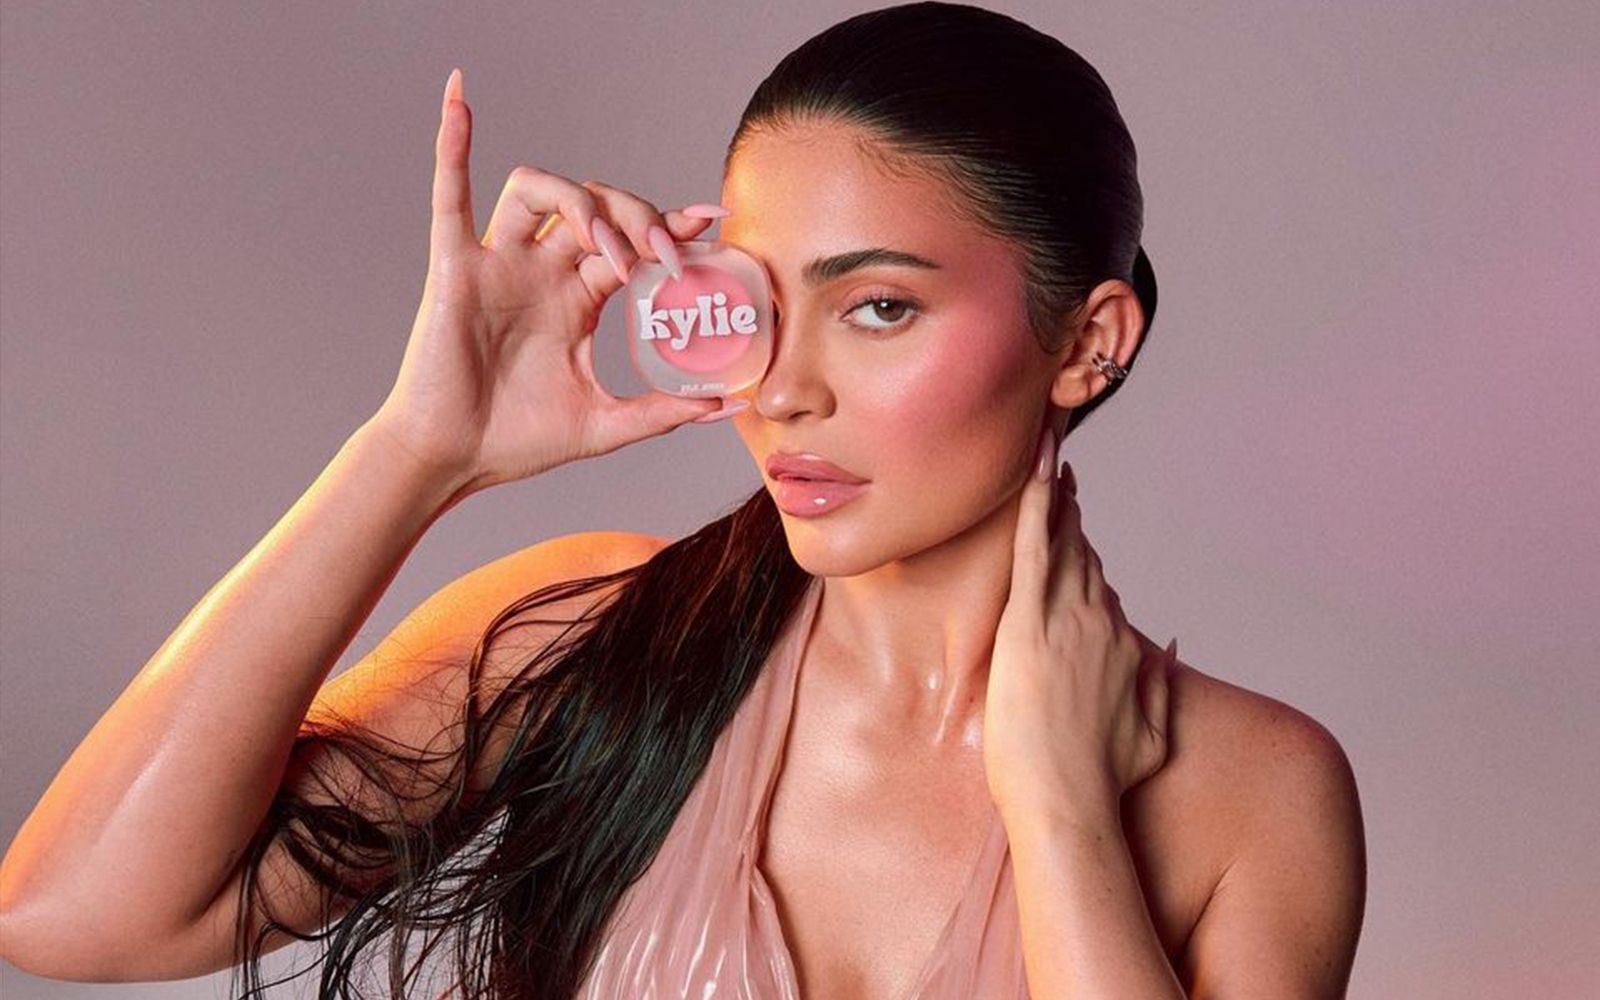 Kylie Cosmetics was Kris Jenner's brainchild